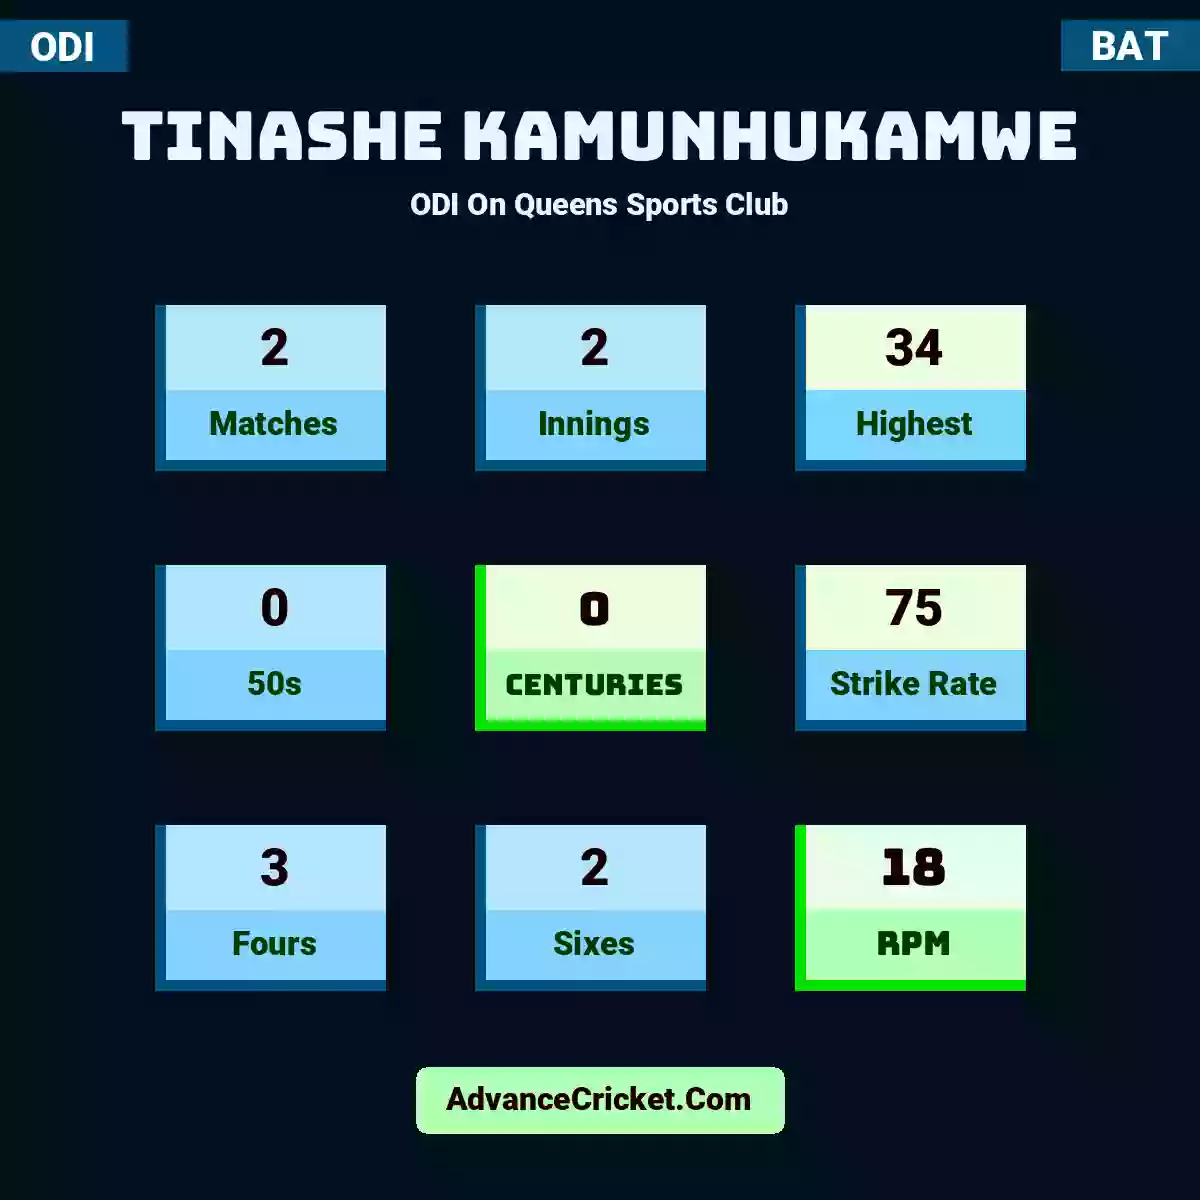 Tinashe Kamunhukamwe ODI  On Queens Sports Club, Tinashe Kamunhukamwe played 2 matches, scored 34 runs as highest, 0 half-centuries, and 0 centuries, with a strike rate of 75. T.Kamunhukamwe hit 3 fours and 2 sixes, with an RPM of 18.